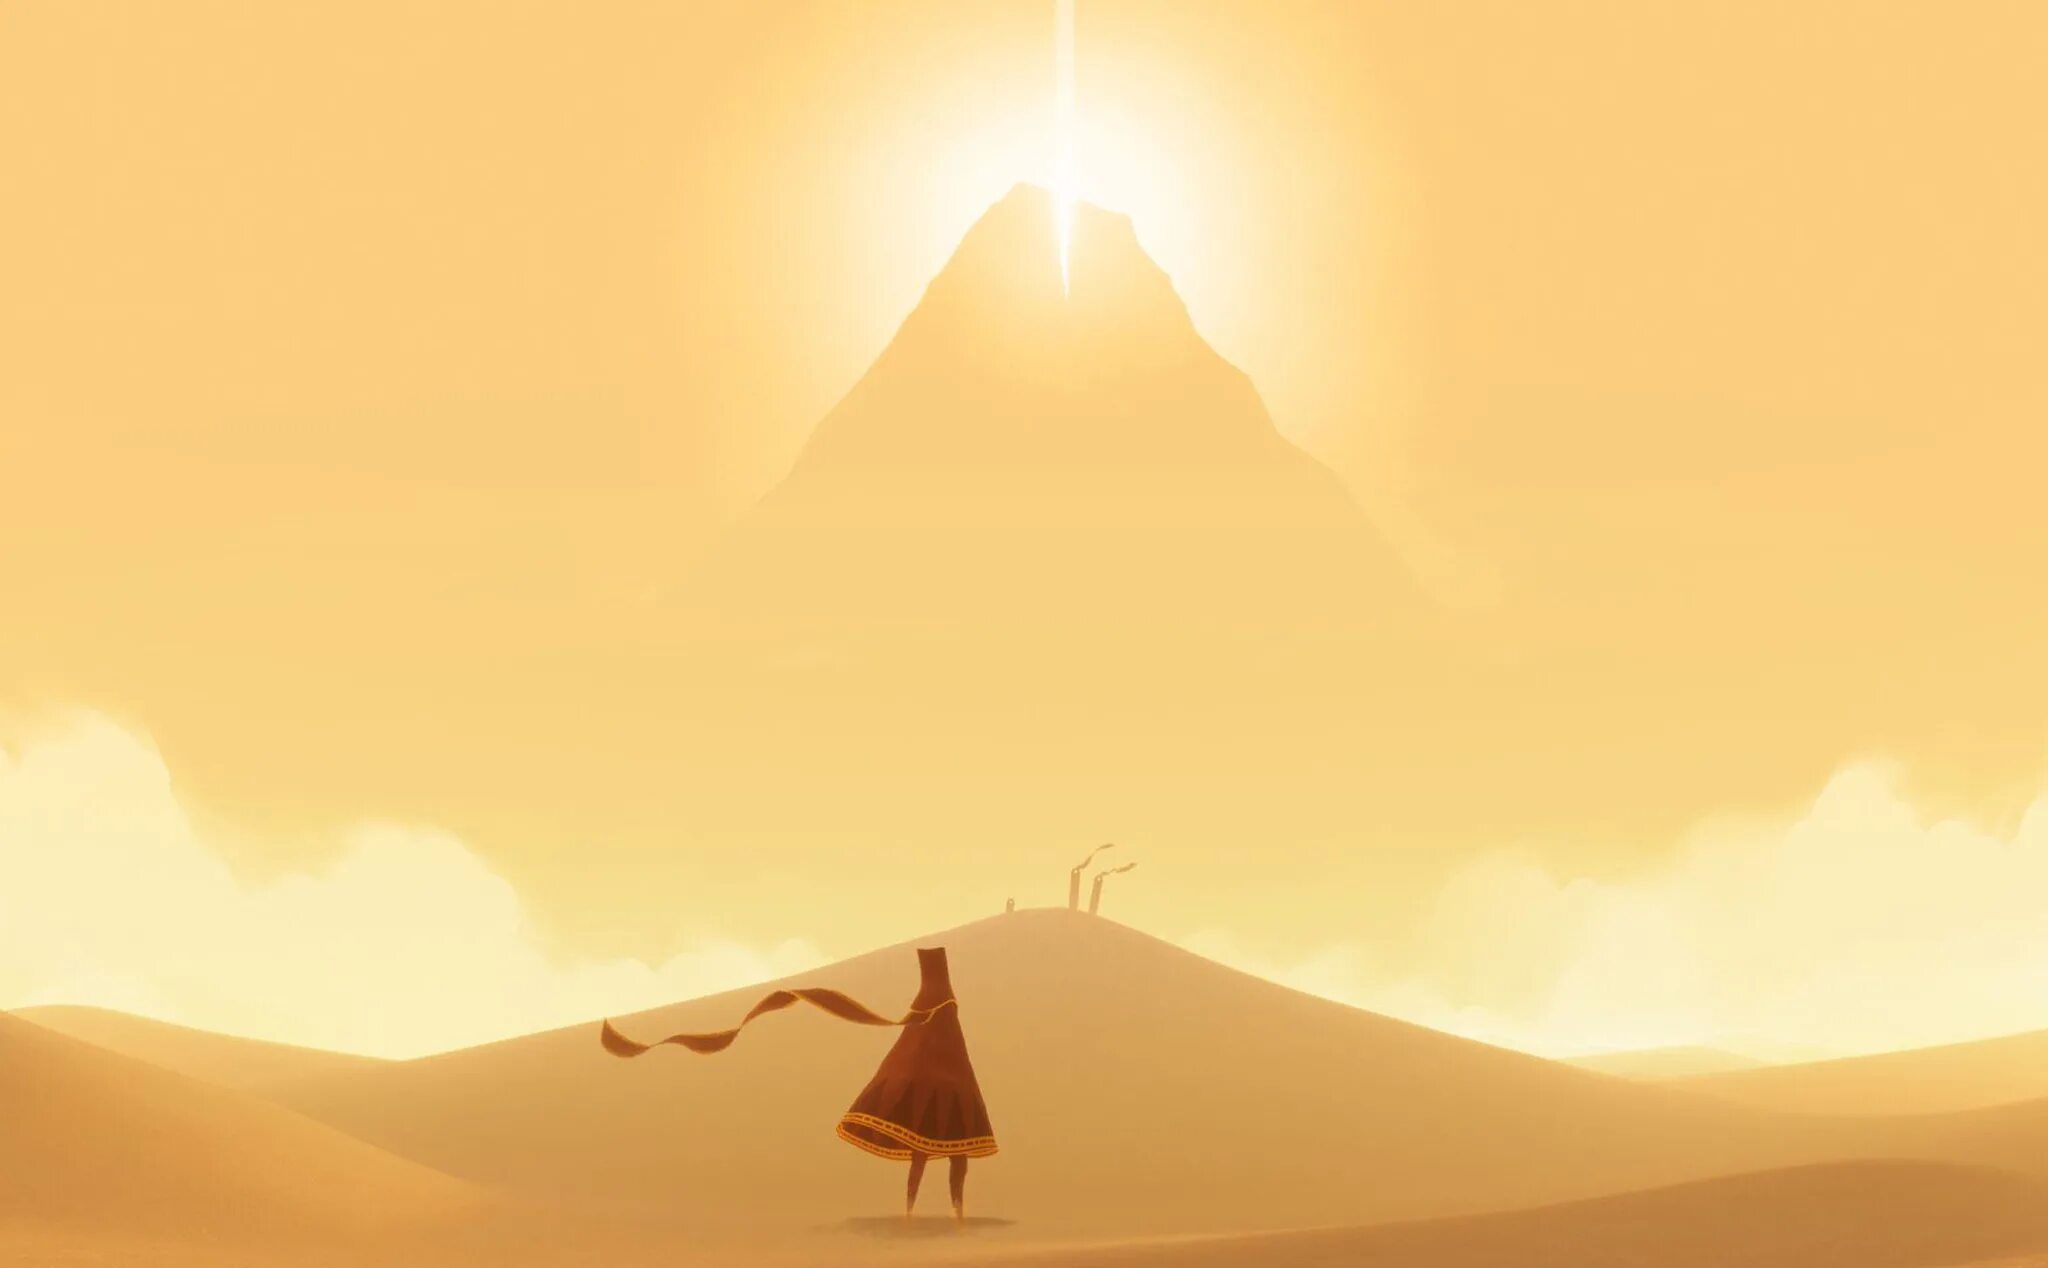 Journey (игра, 2012). Journey игра thatgamecompany. Игра путешествие ps4. Инди игра в пустыне. I like journey